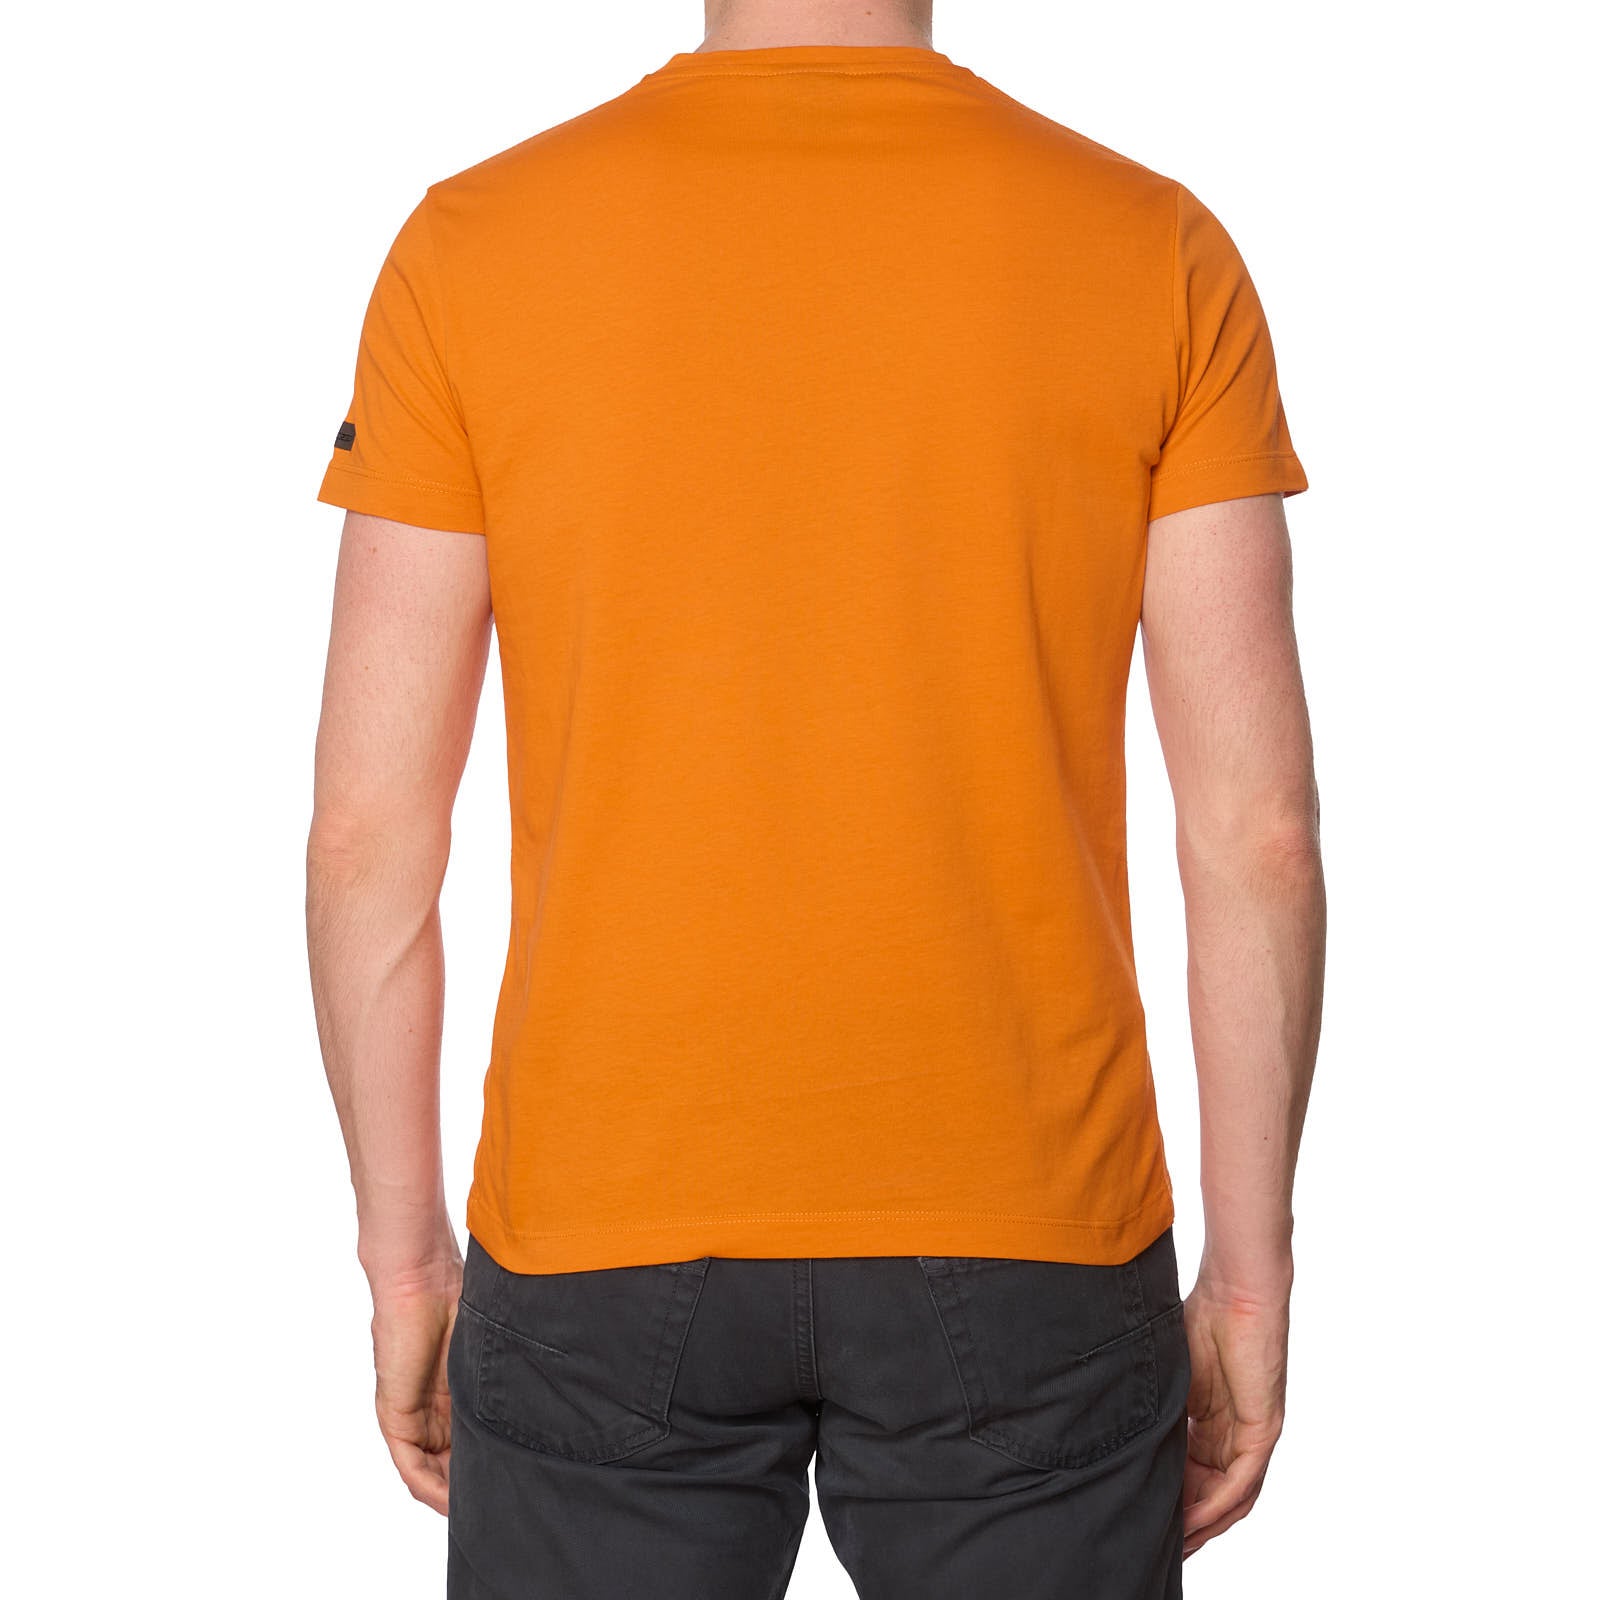 RRD Milano Orange Moby-Dick Call me Ishmael Cotton Short Sleeve T-Shirt EU 48 NEW